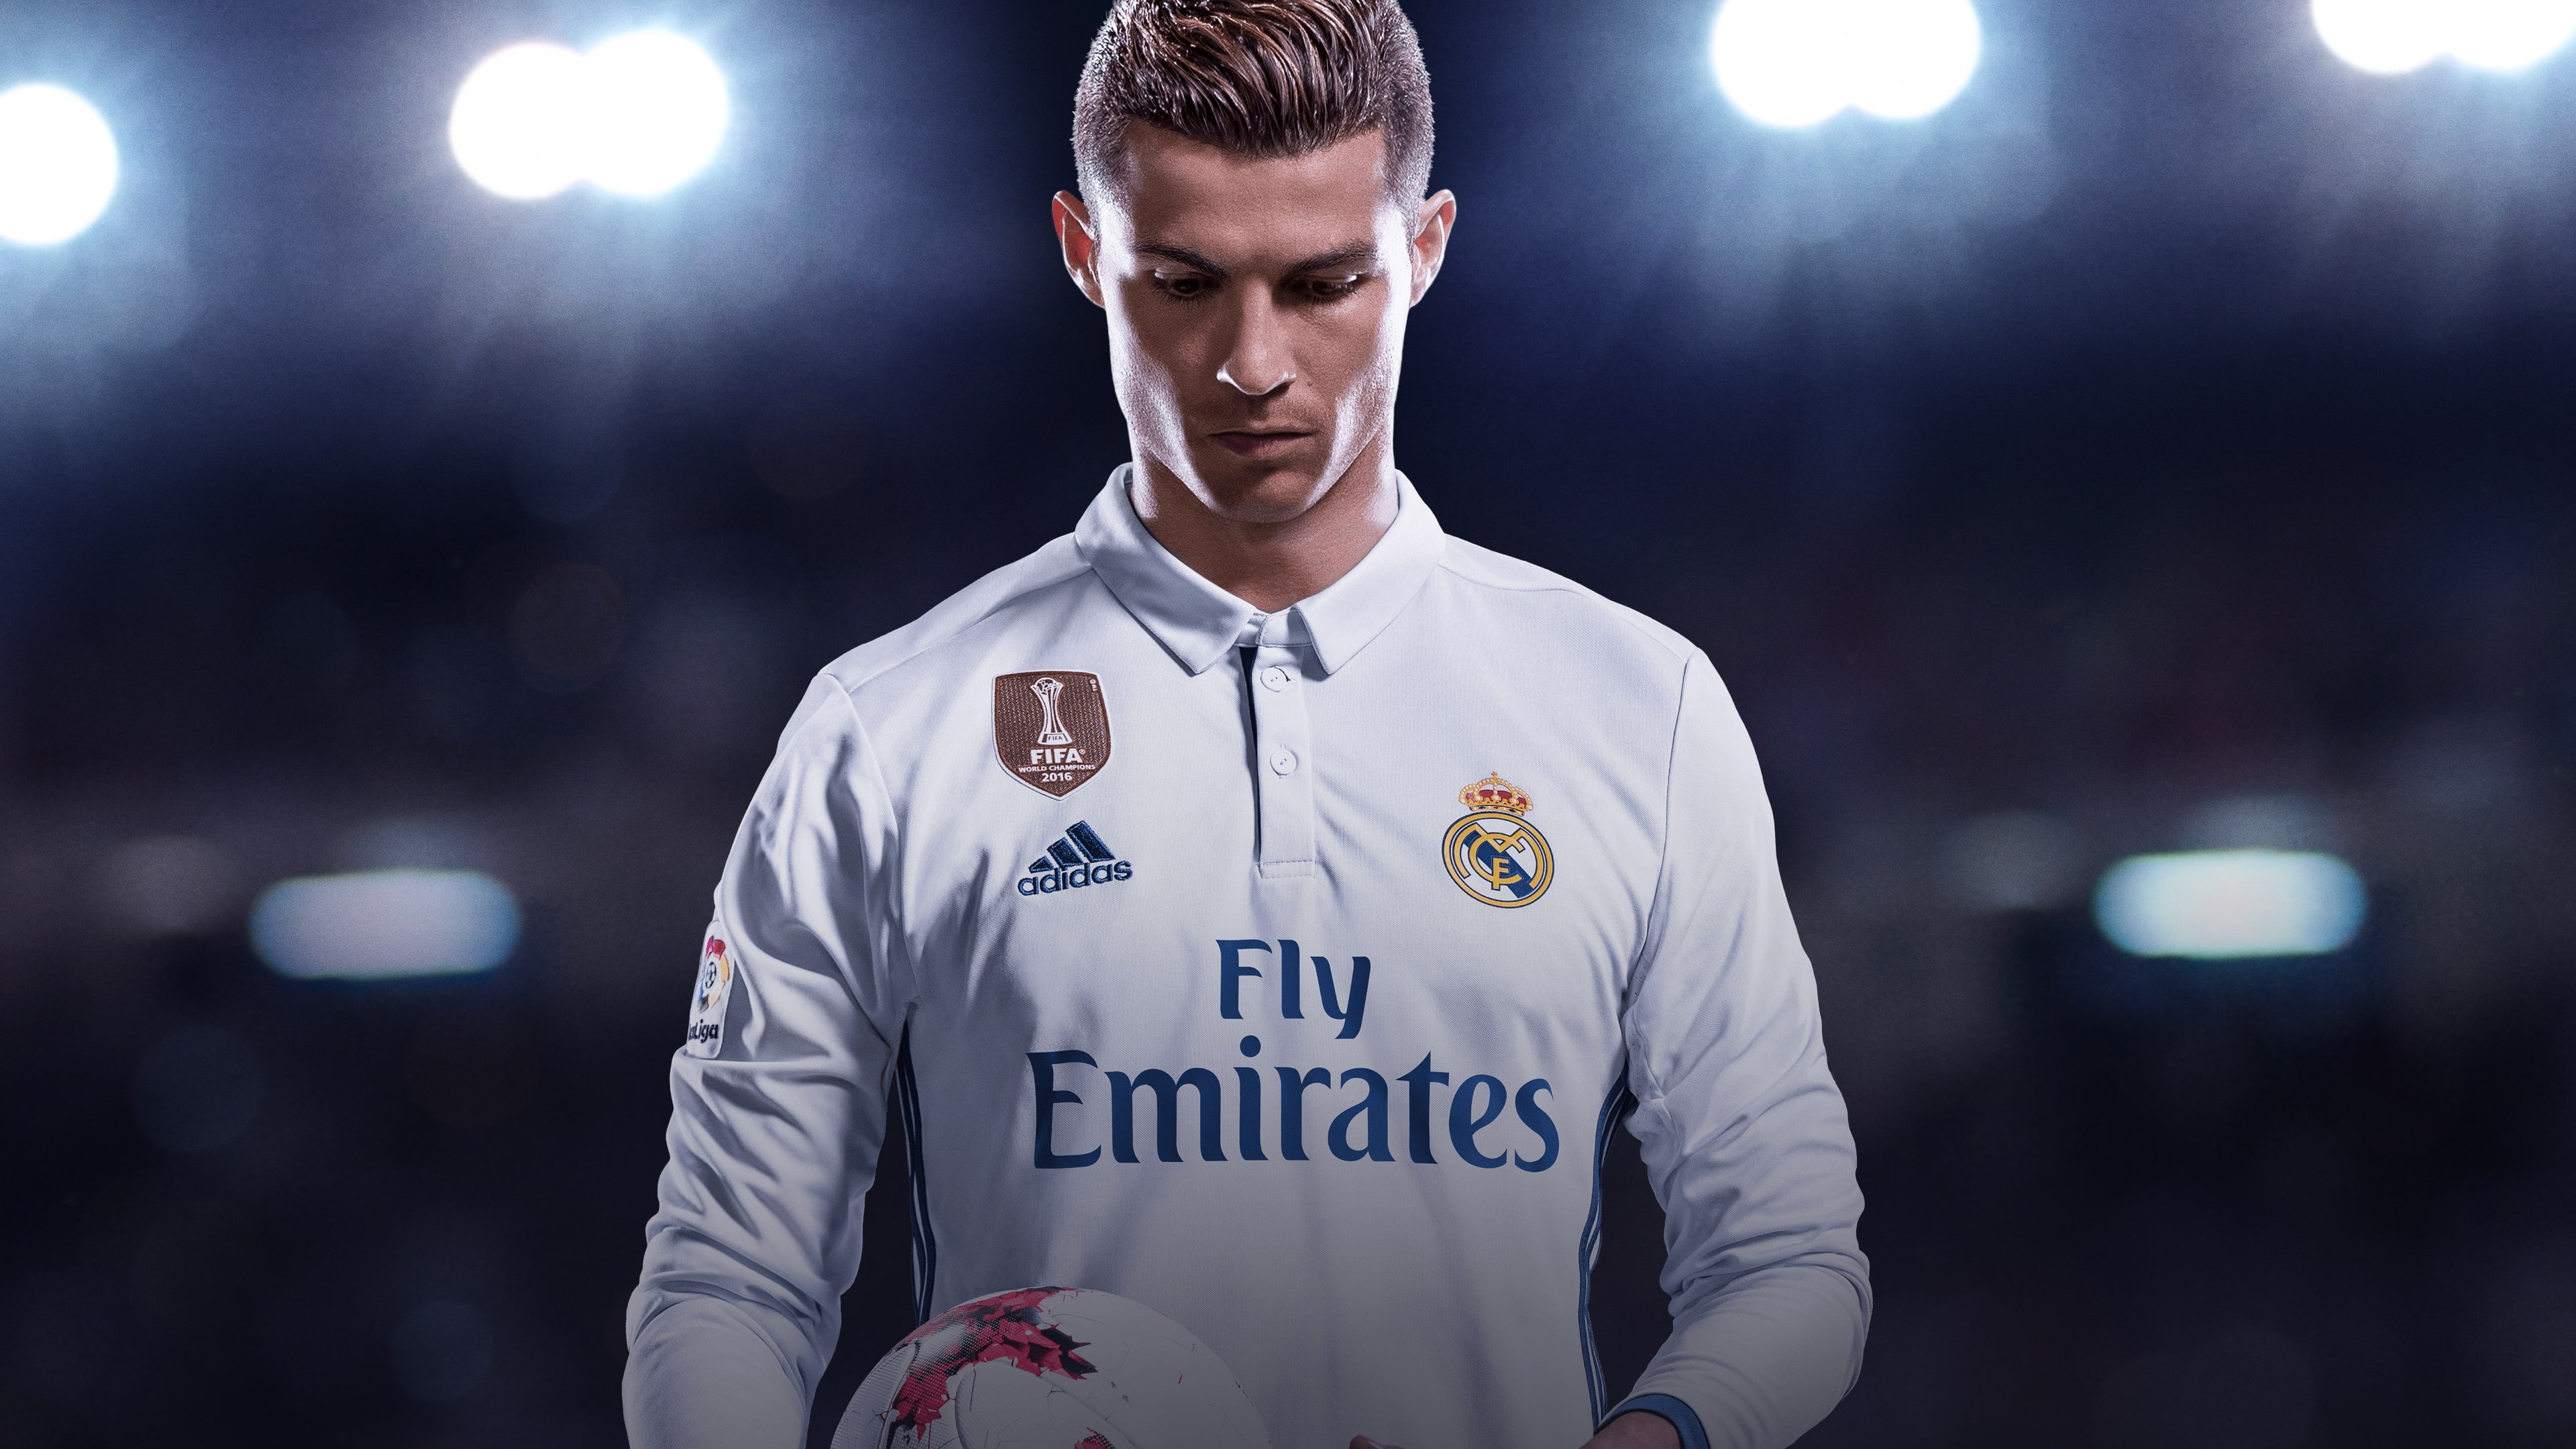 4k, Ronaldo Edition, screenshot, E3 2017, FIFA 18